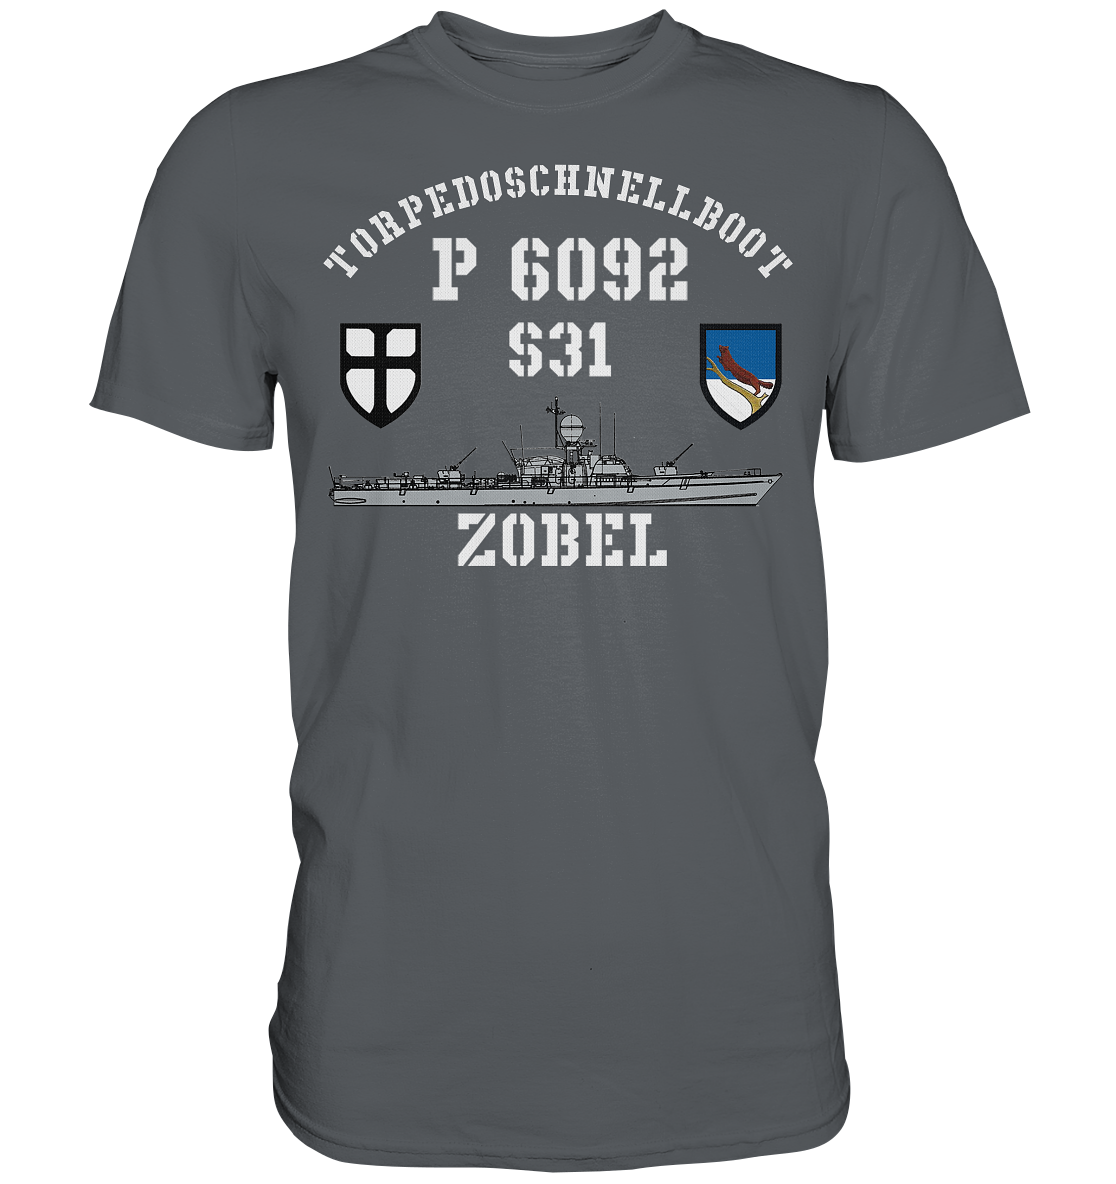 S31 ZOBEL - Premium Shirt